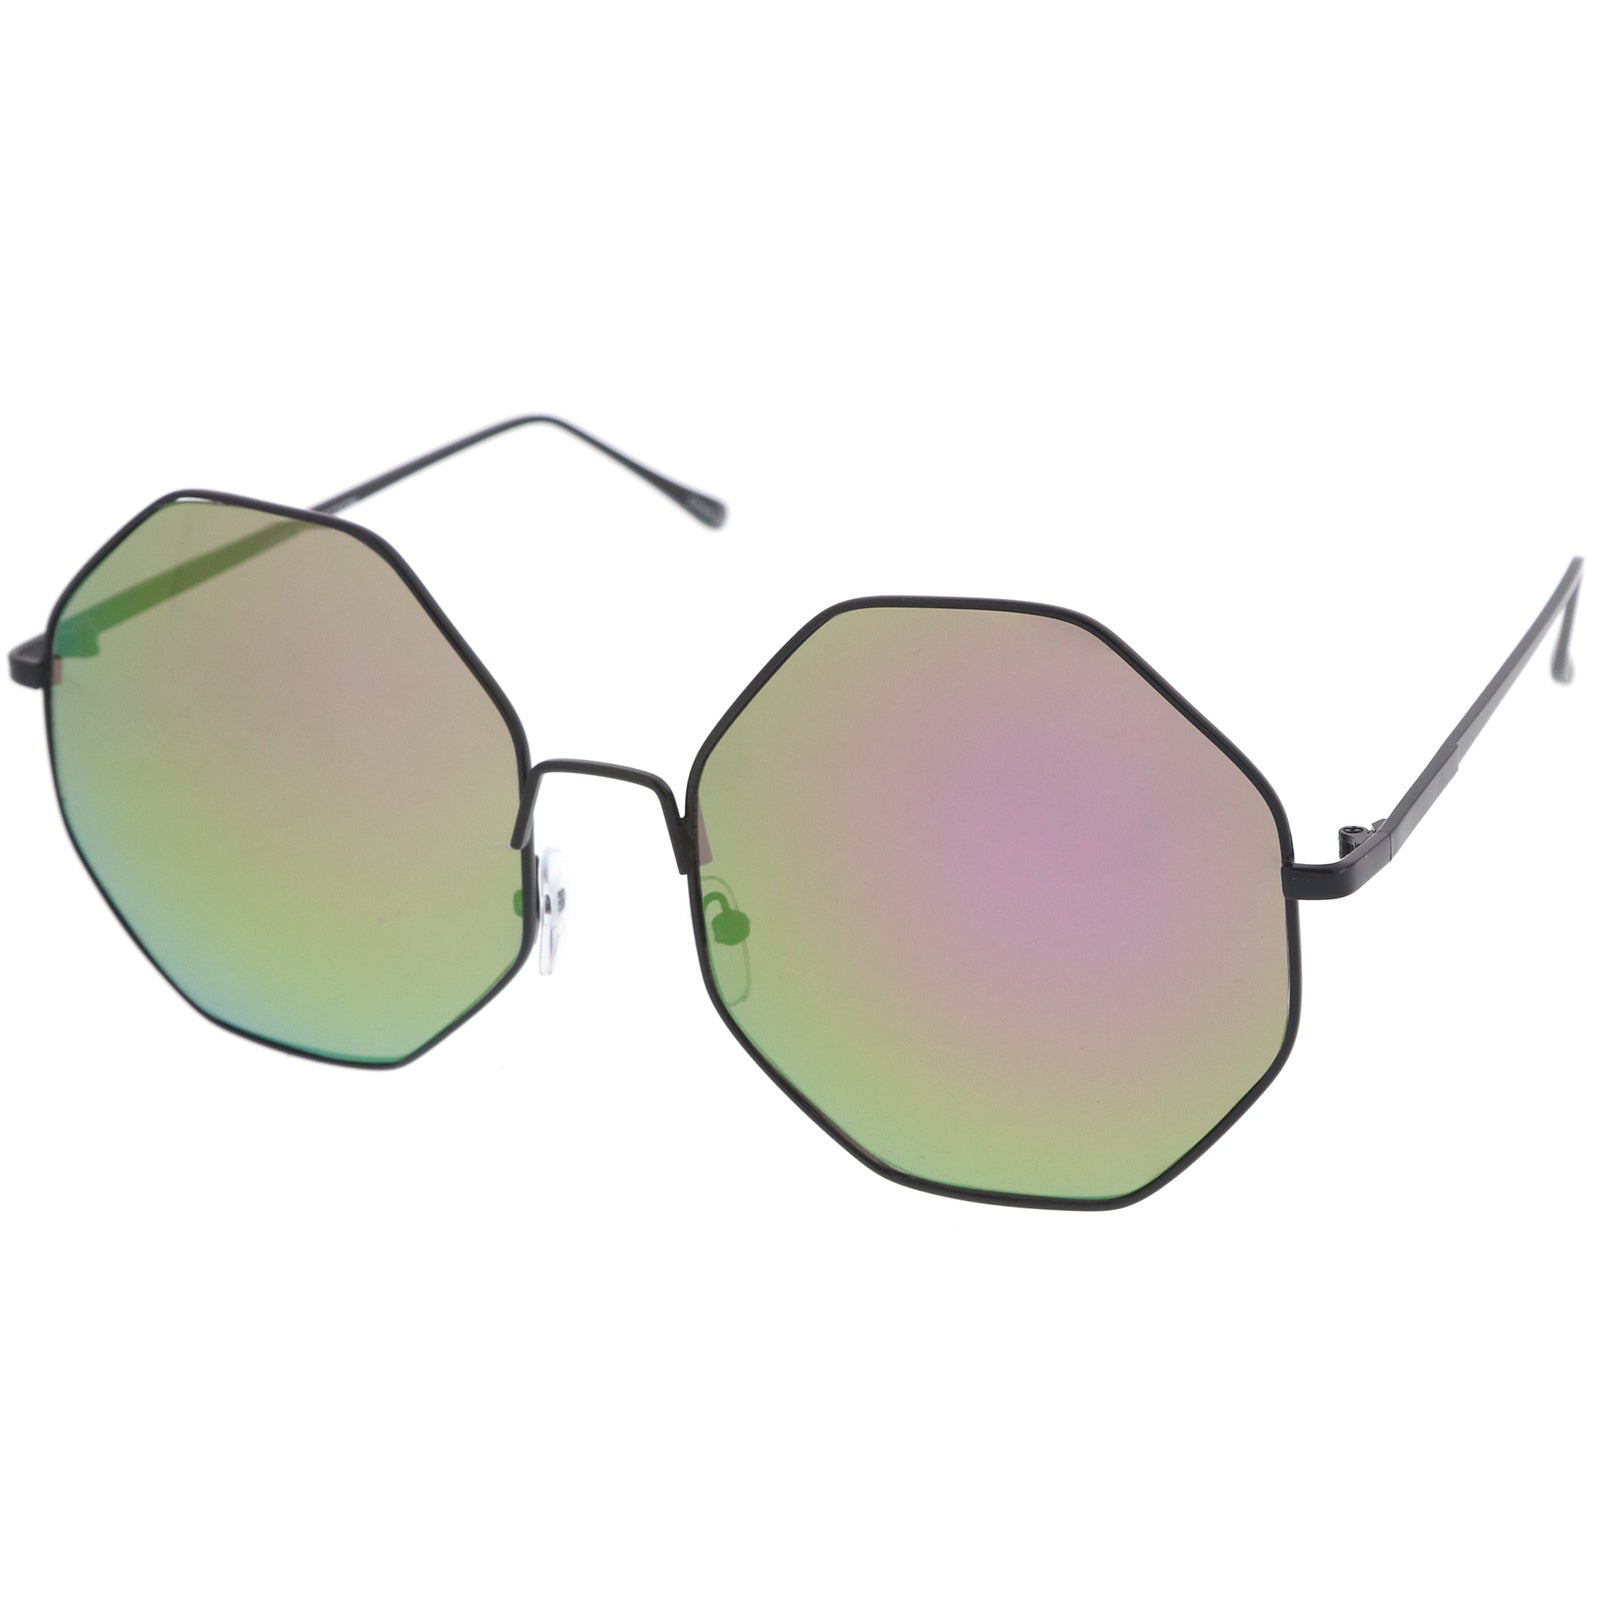 Silver Mirror Hexagonal Sunglasses For Men